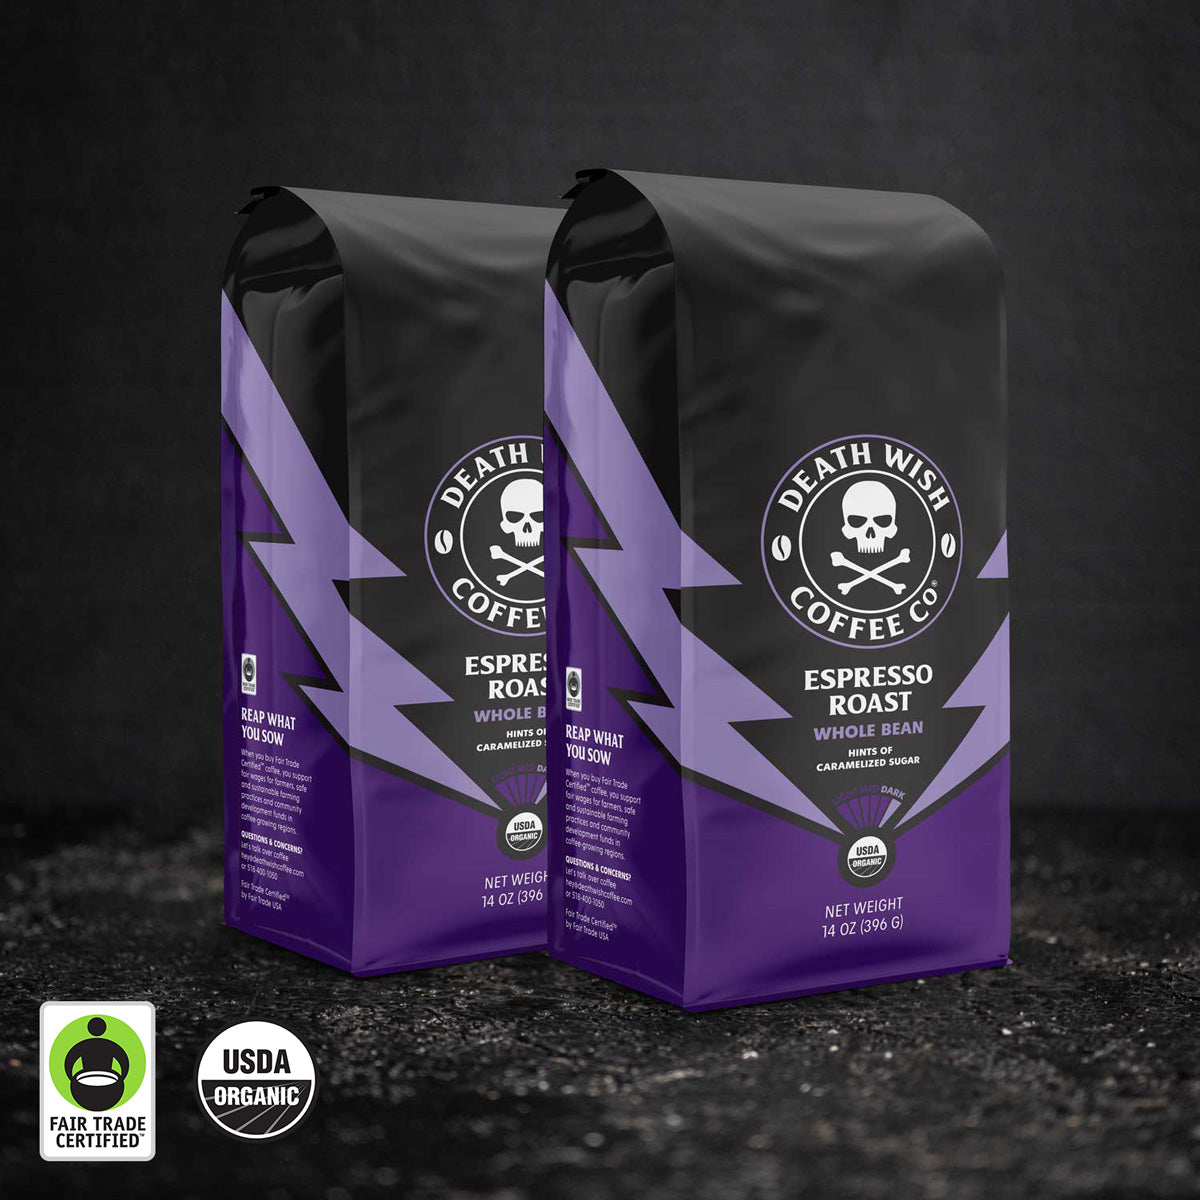 Death Wish Coffee Espresso Roast Whole Bean Coffee - 2 Bags